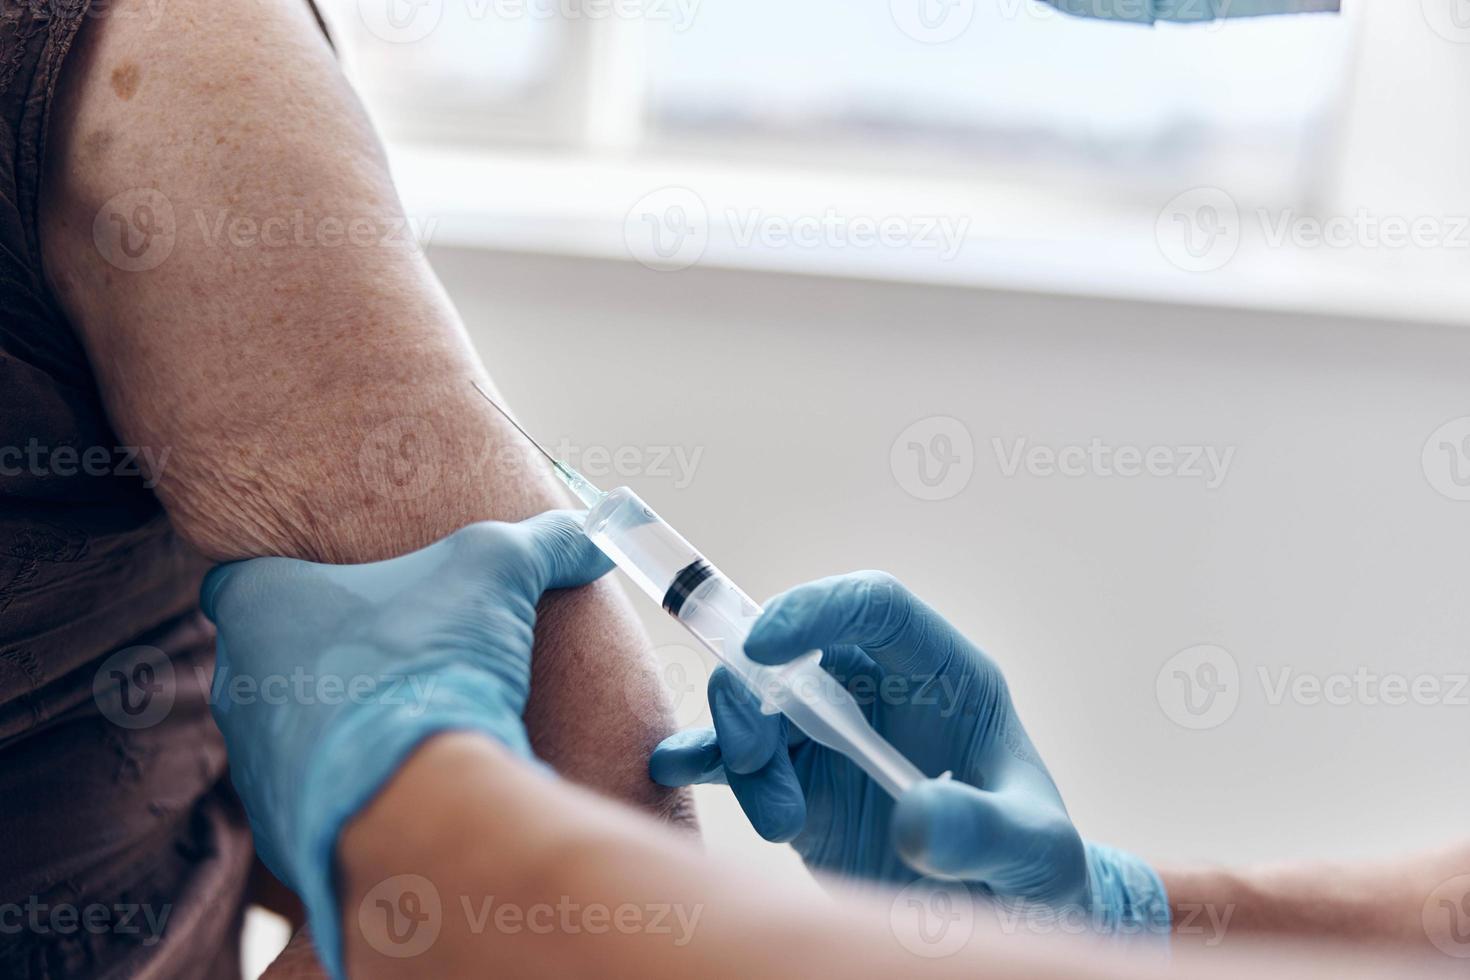 Masculin médecin donnant un injection vaccin passeport pandémie coronavirus photo